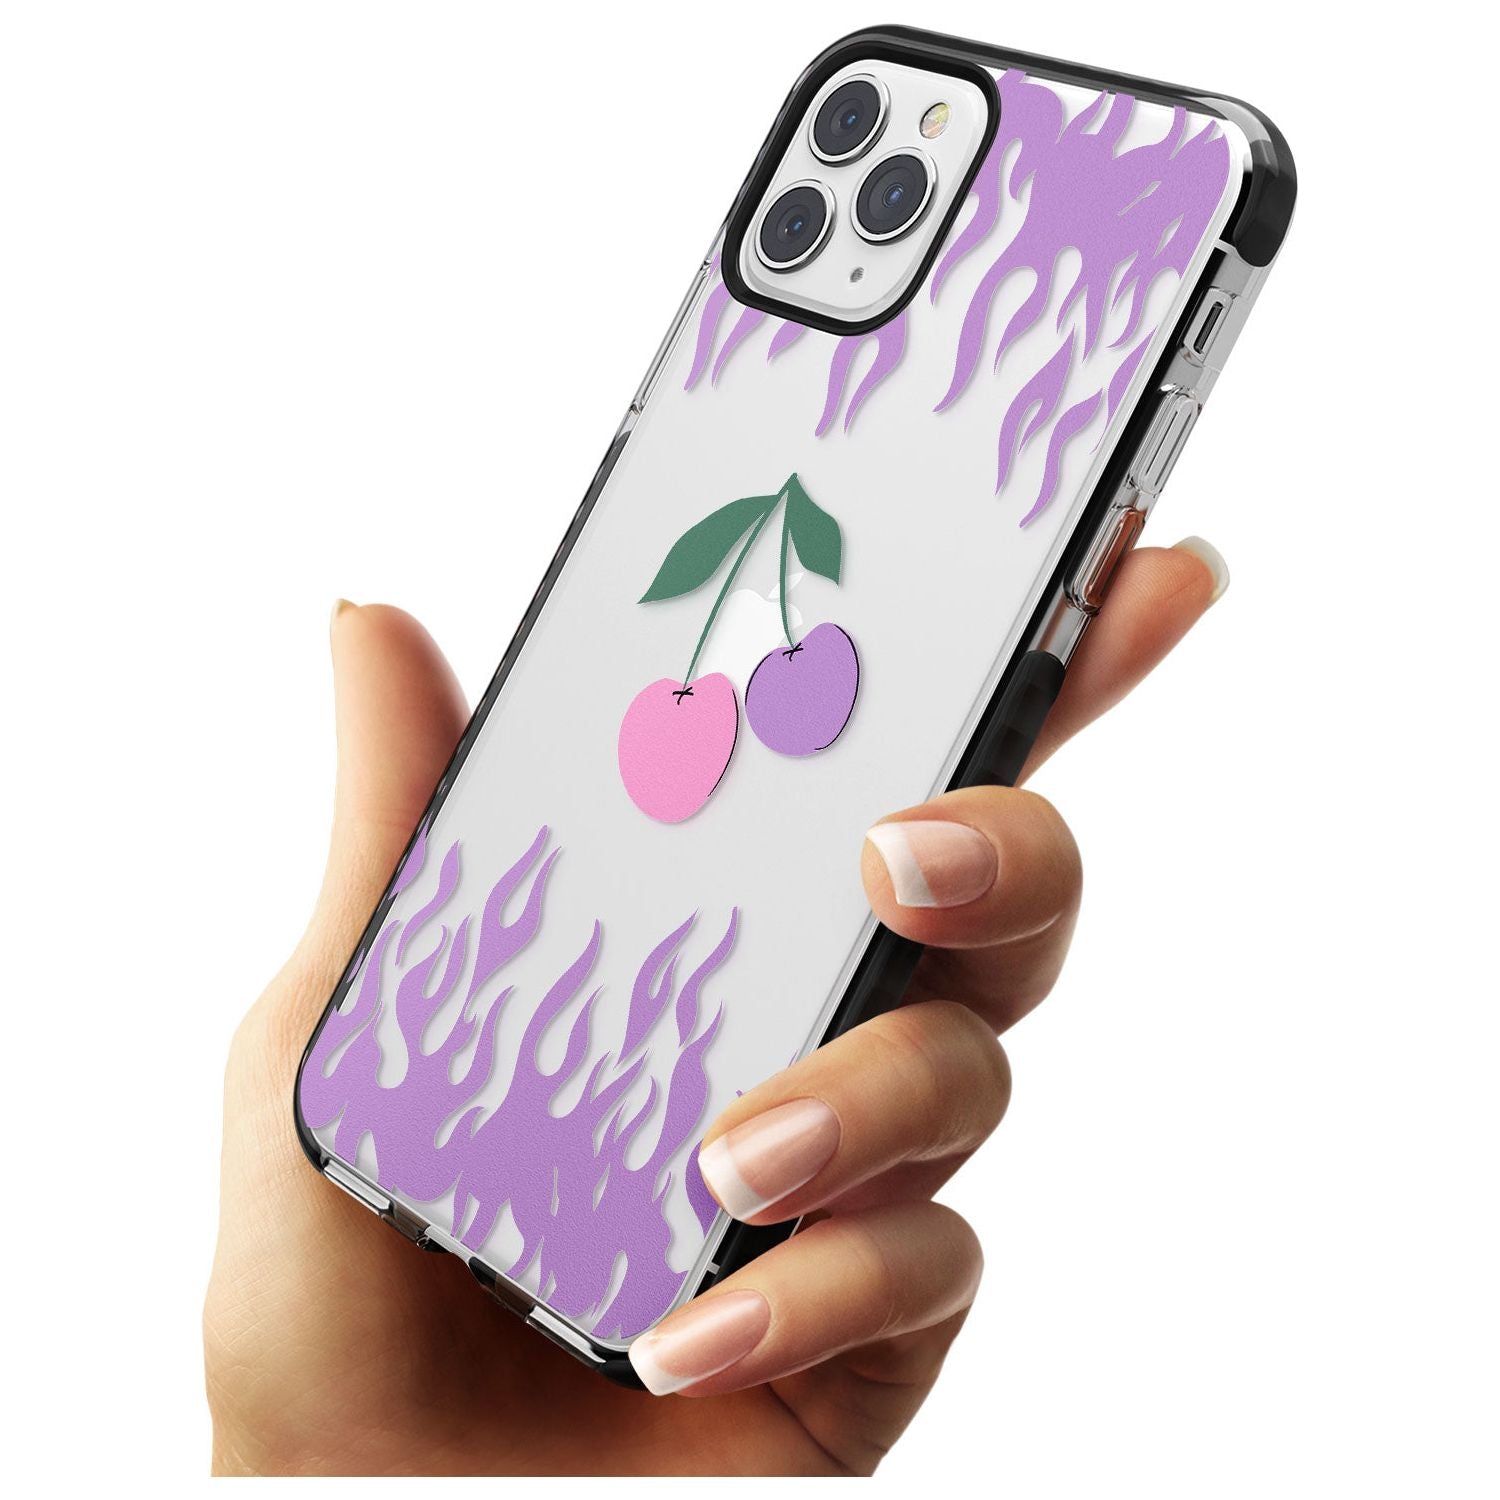 Cherries n' Flames Black Impact Phone Case for iPhone 11